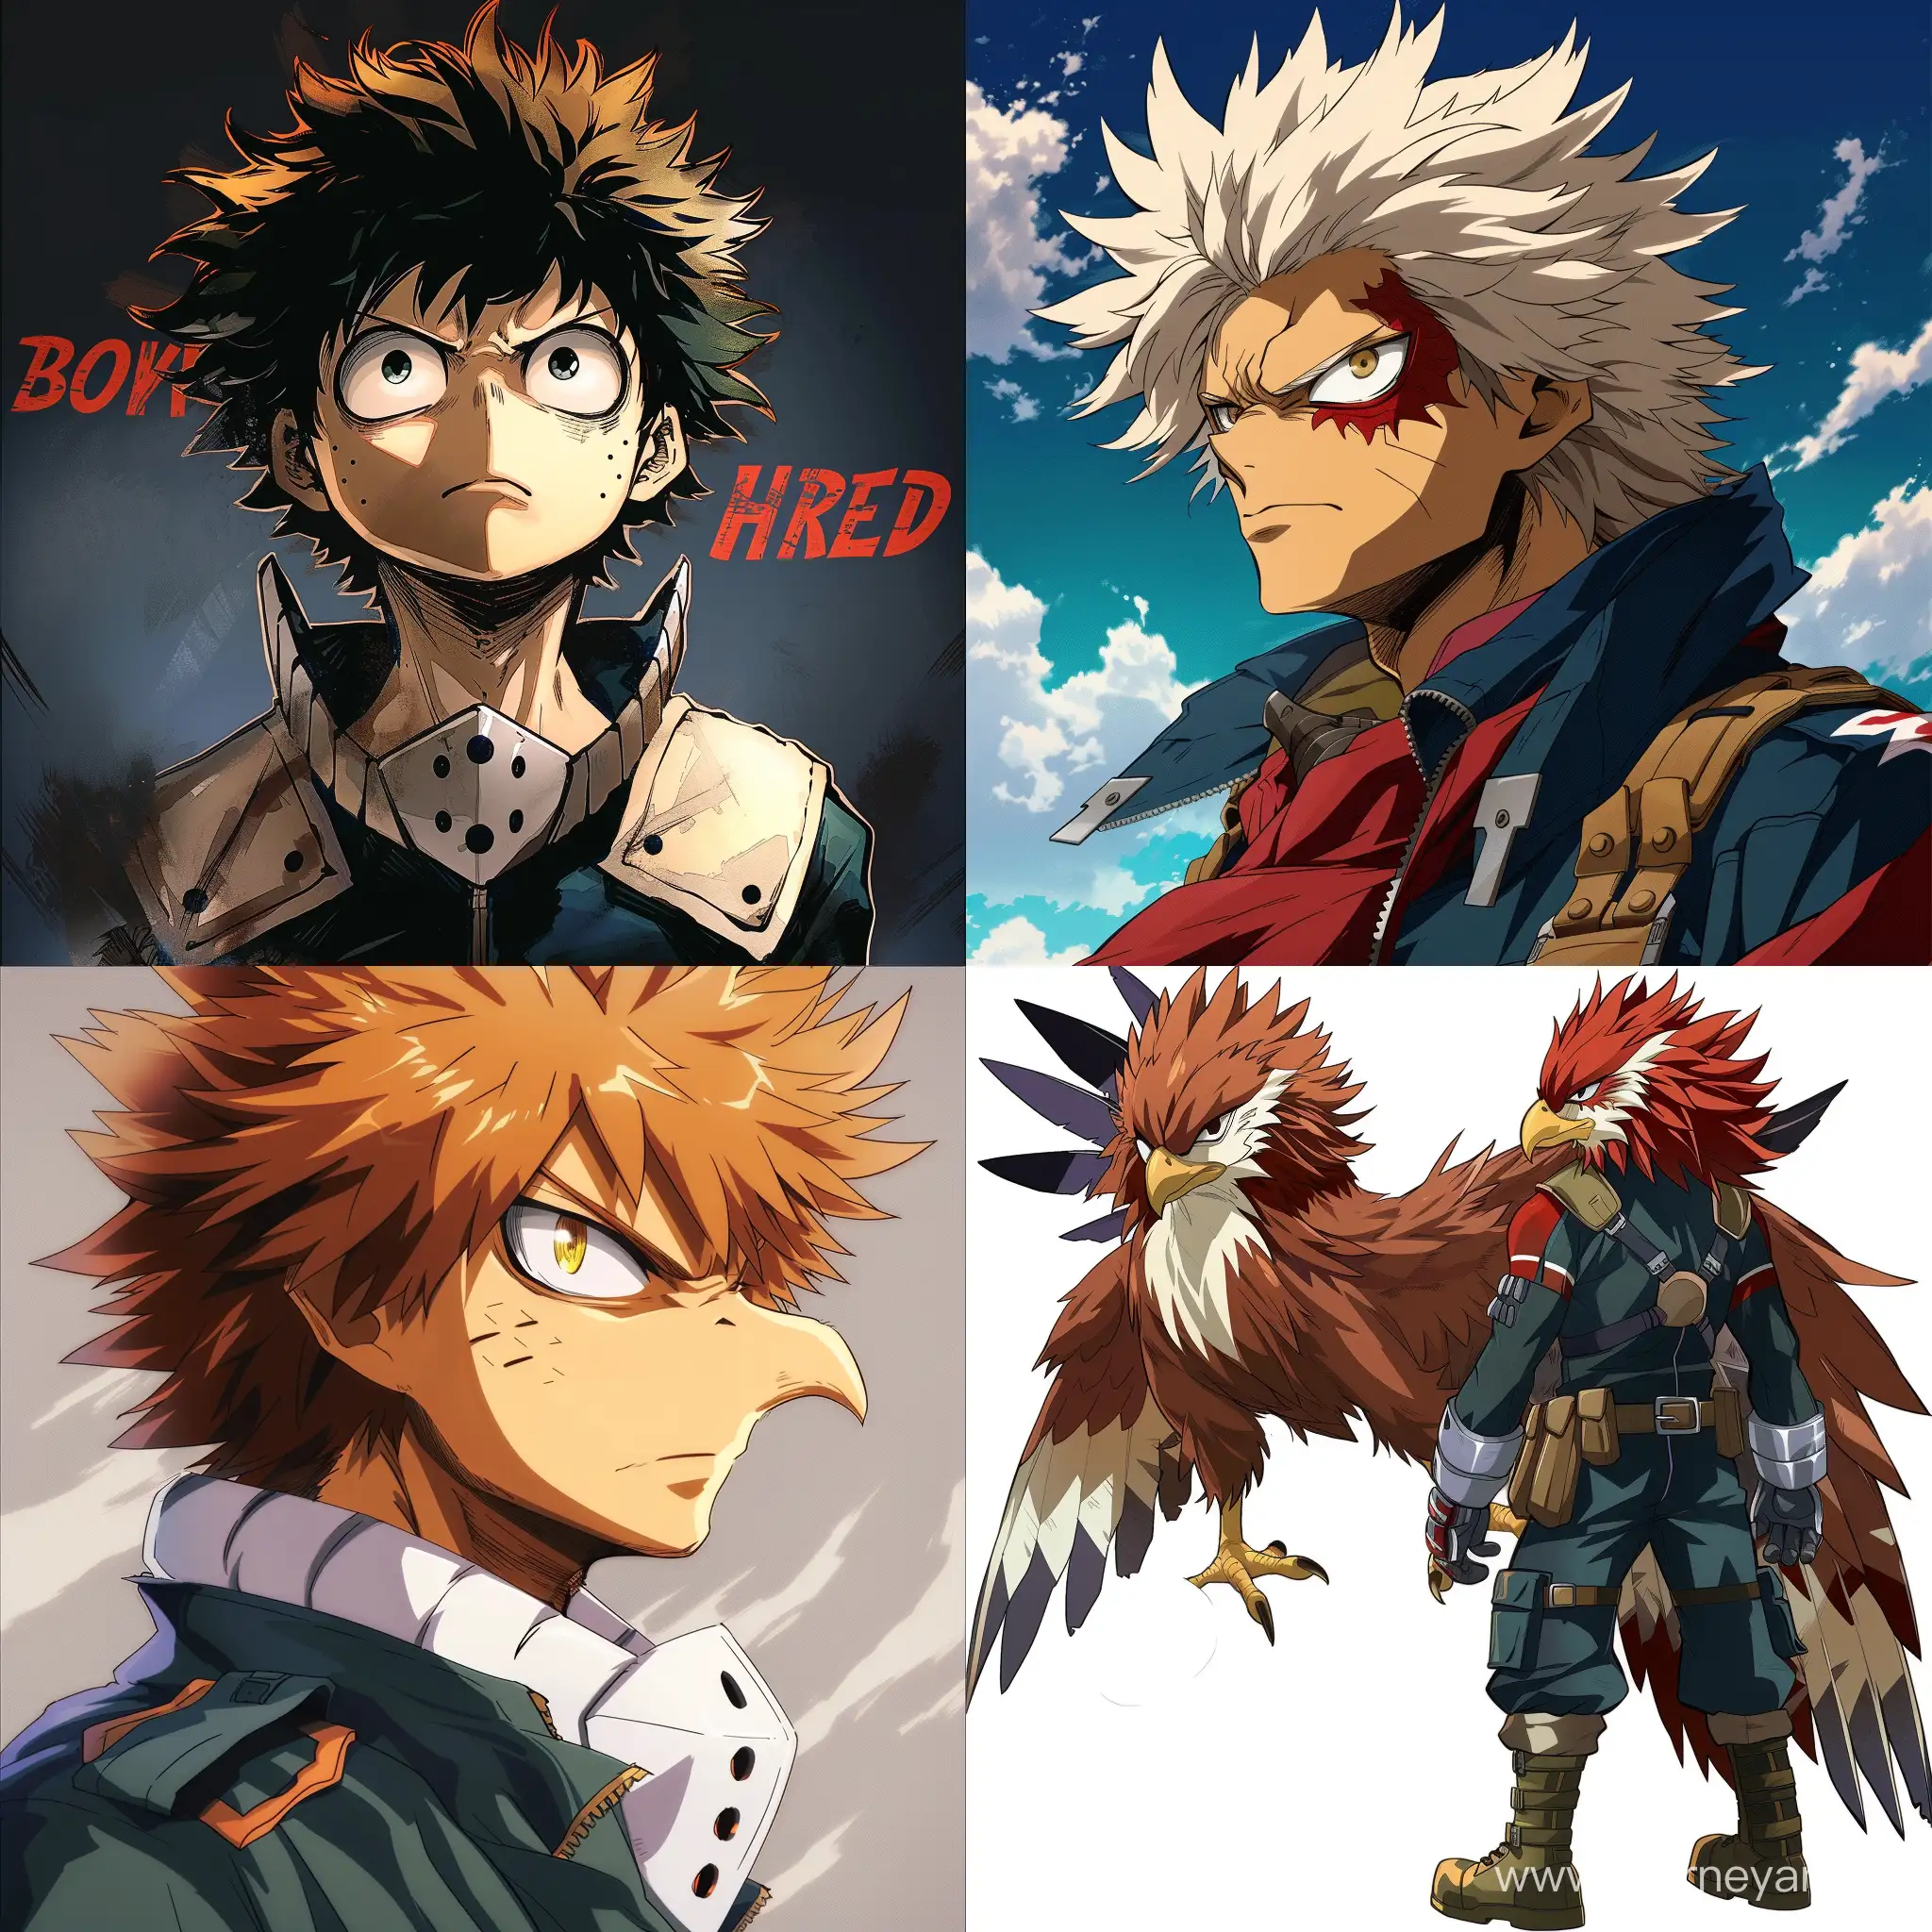 Dynamic-Hawks-Action-Figure-from-Boku-no-Hero-Academia-Manga-Series